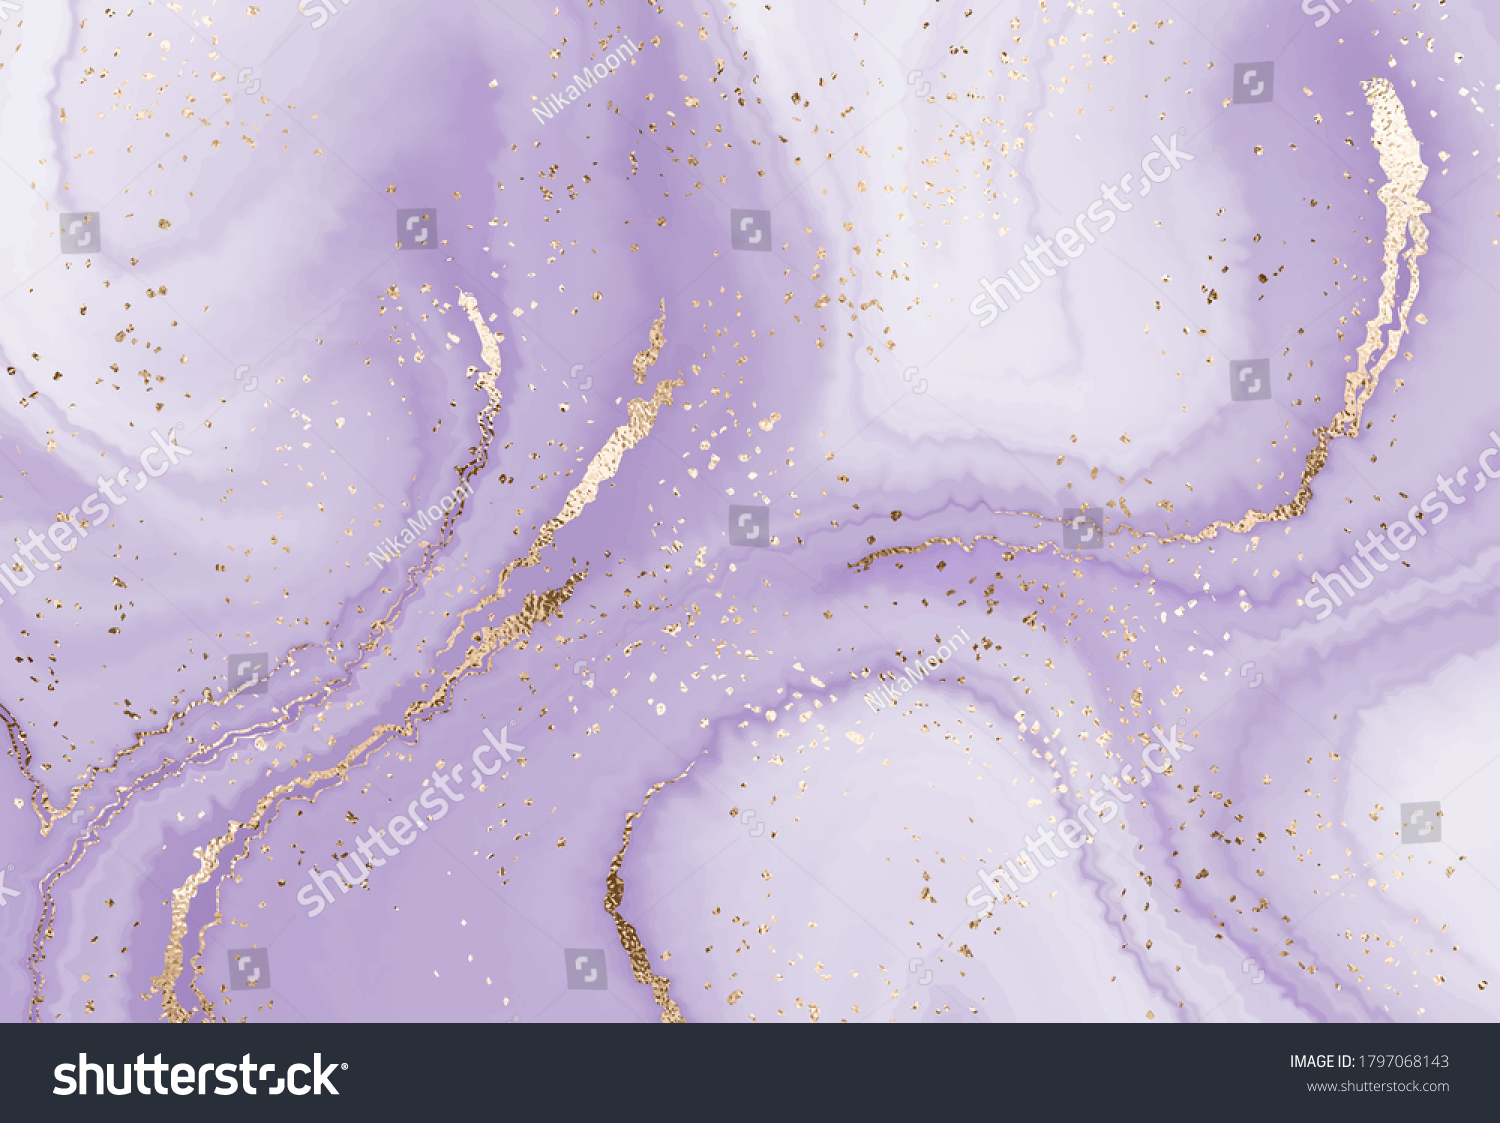 5,145 Lavender Glitter Background Images, Stock Photos & Vectors ...